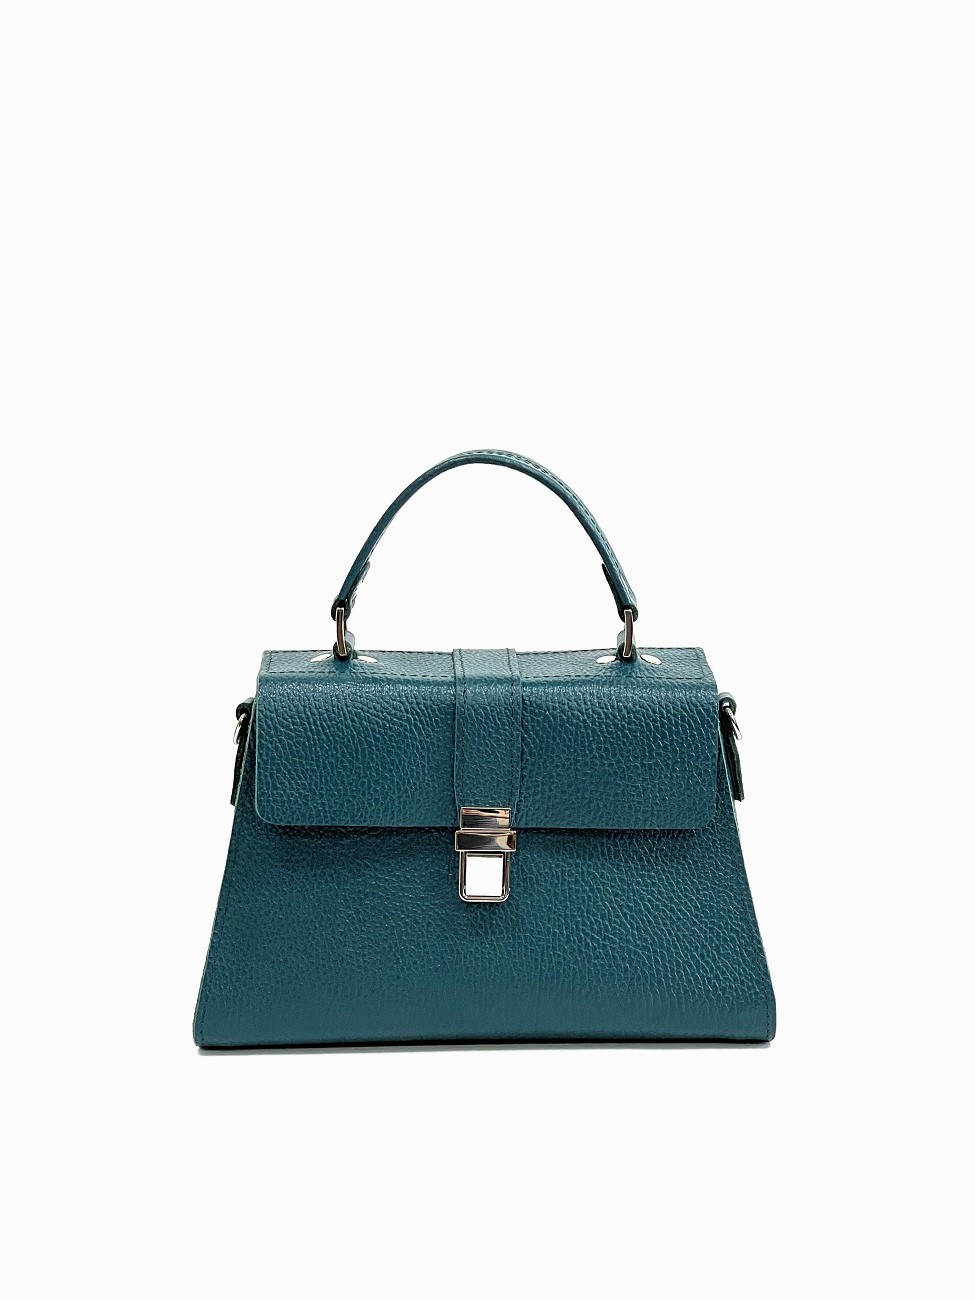 Женская кожаная сумка трапеция сине-зеленая A023 teal mini grain